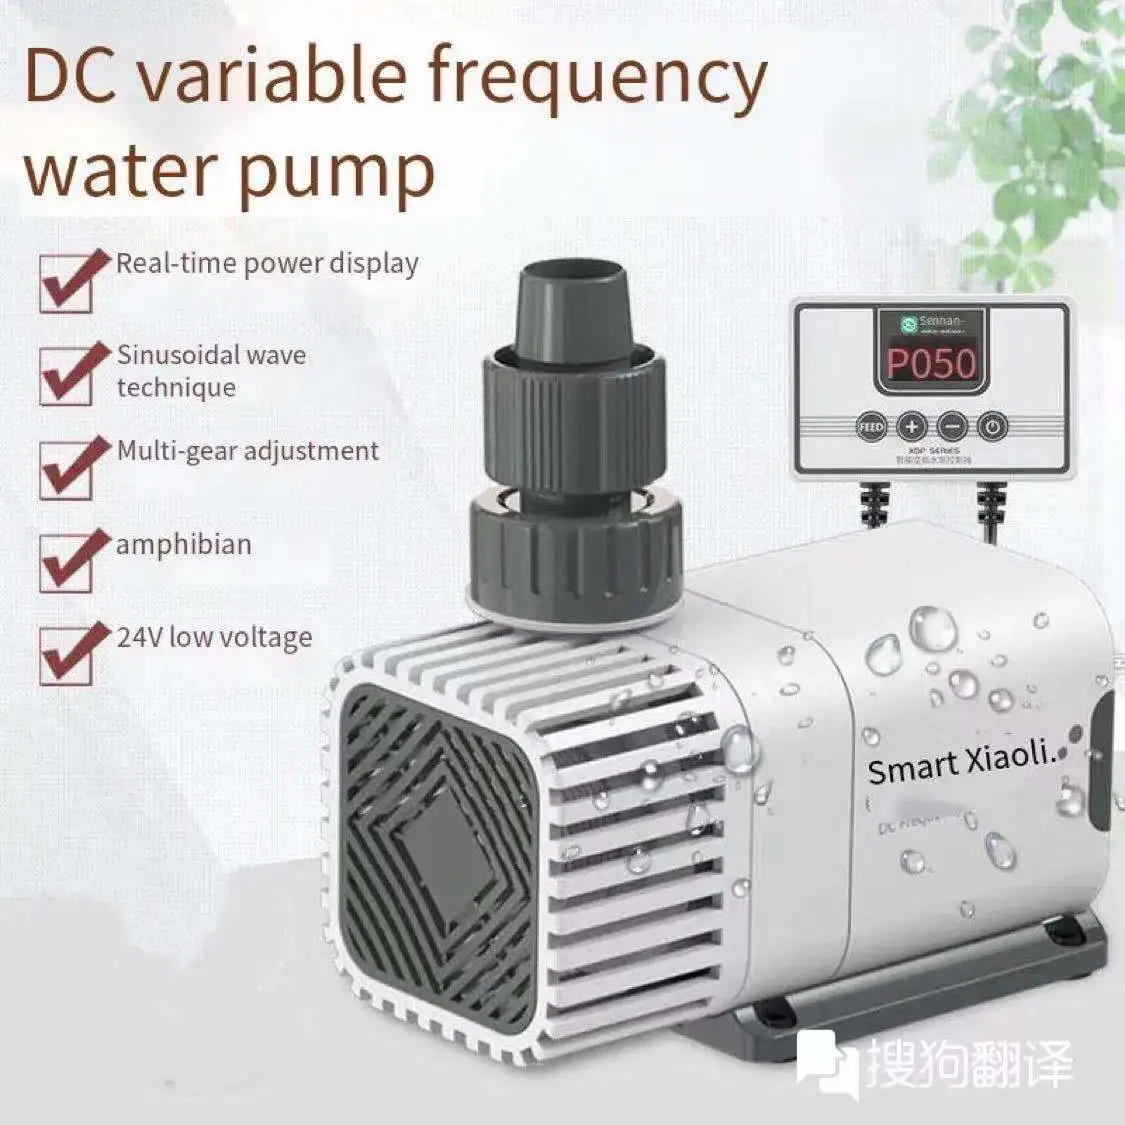 XDP  frequency conversion submersible pump fish tank filter pump high-power pumping pump pool fountain pump aquarium accessories